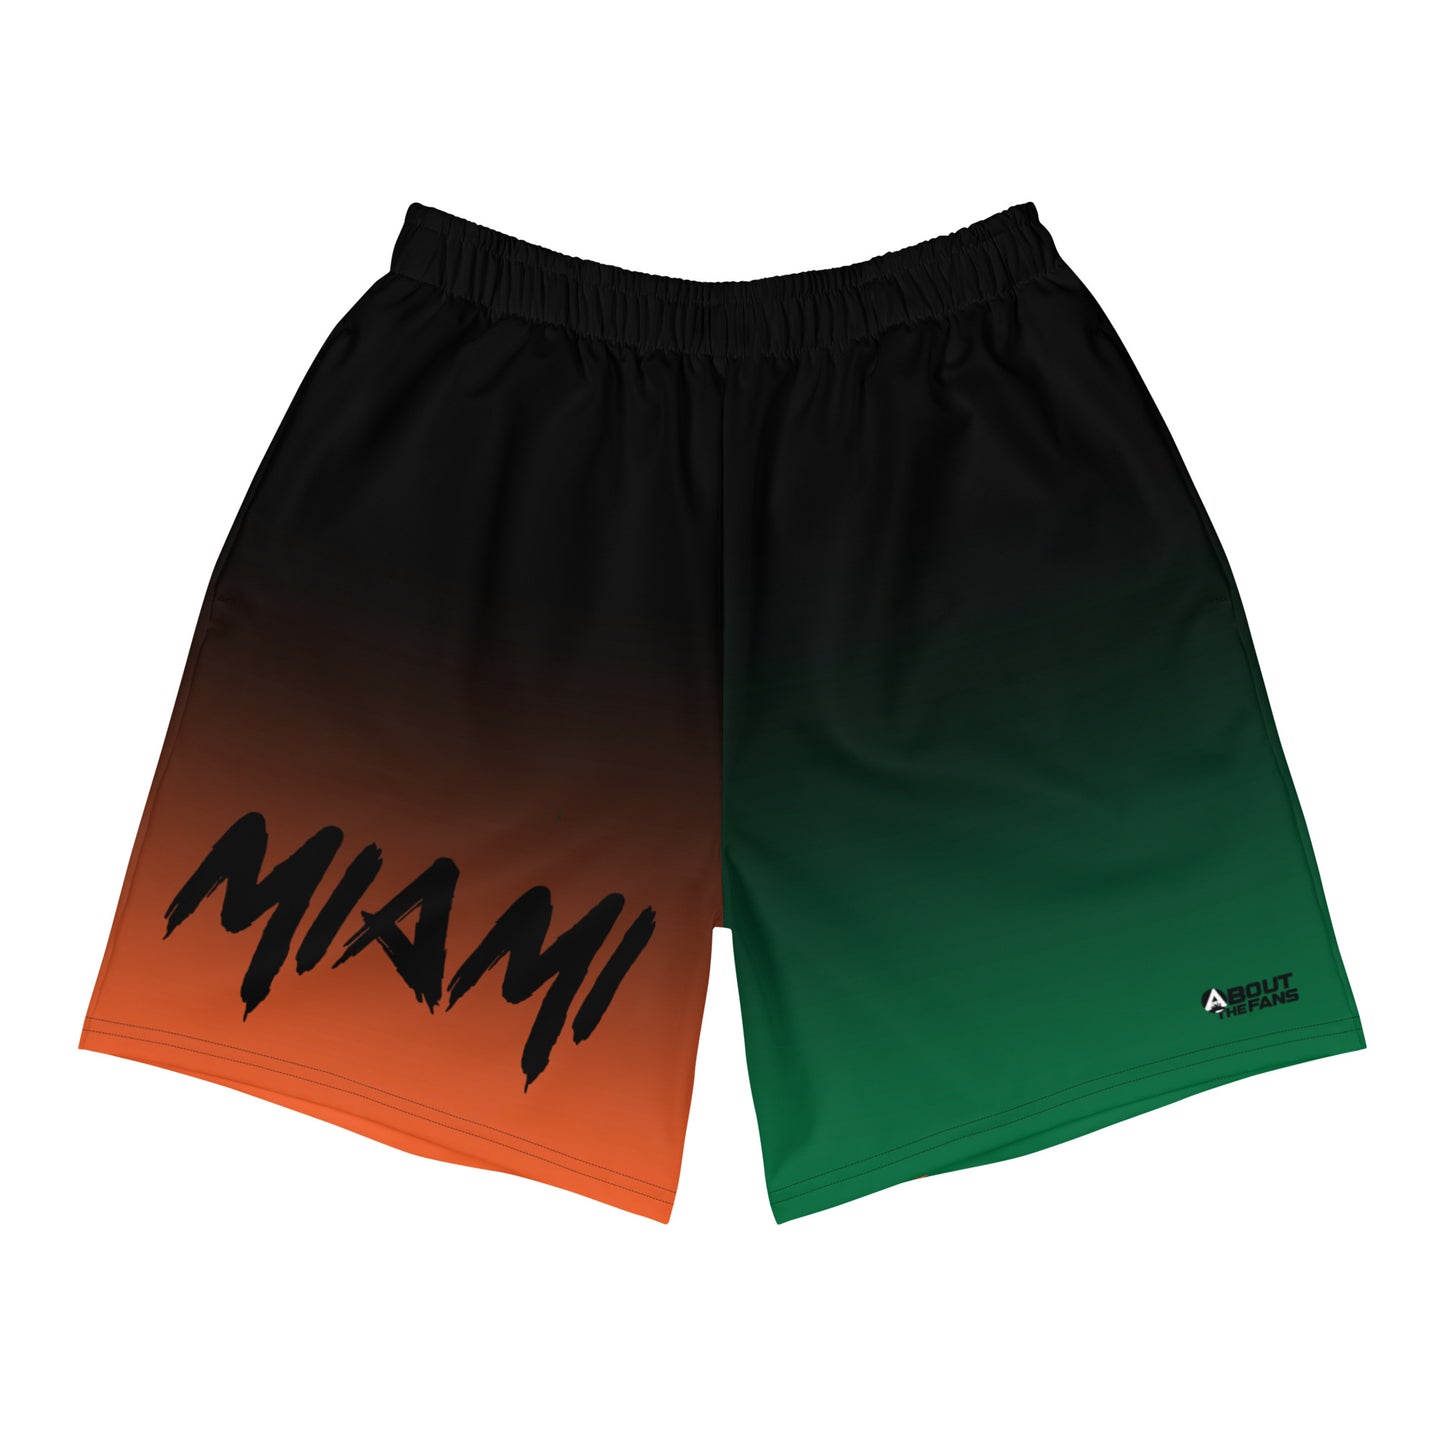 Mean Miami Shorts